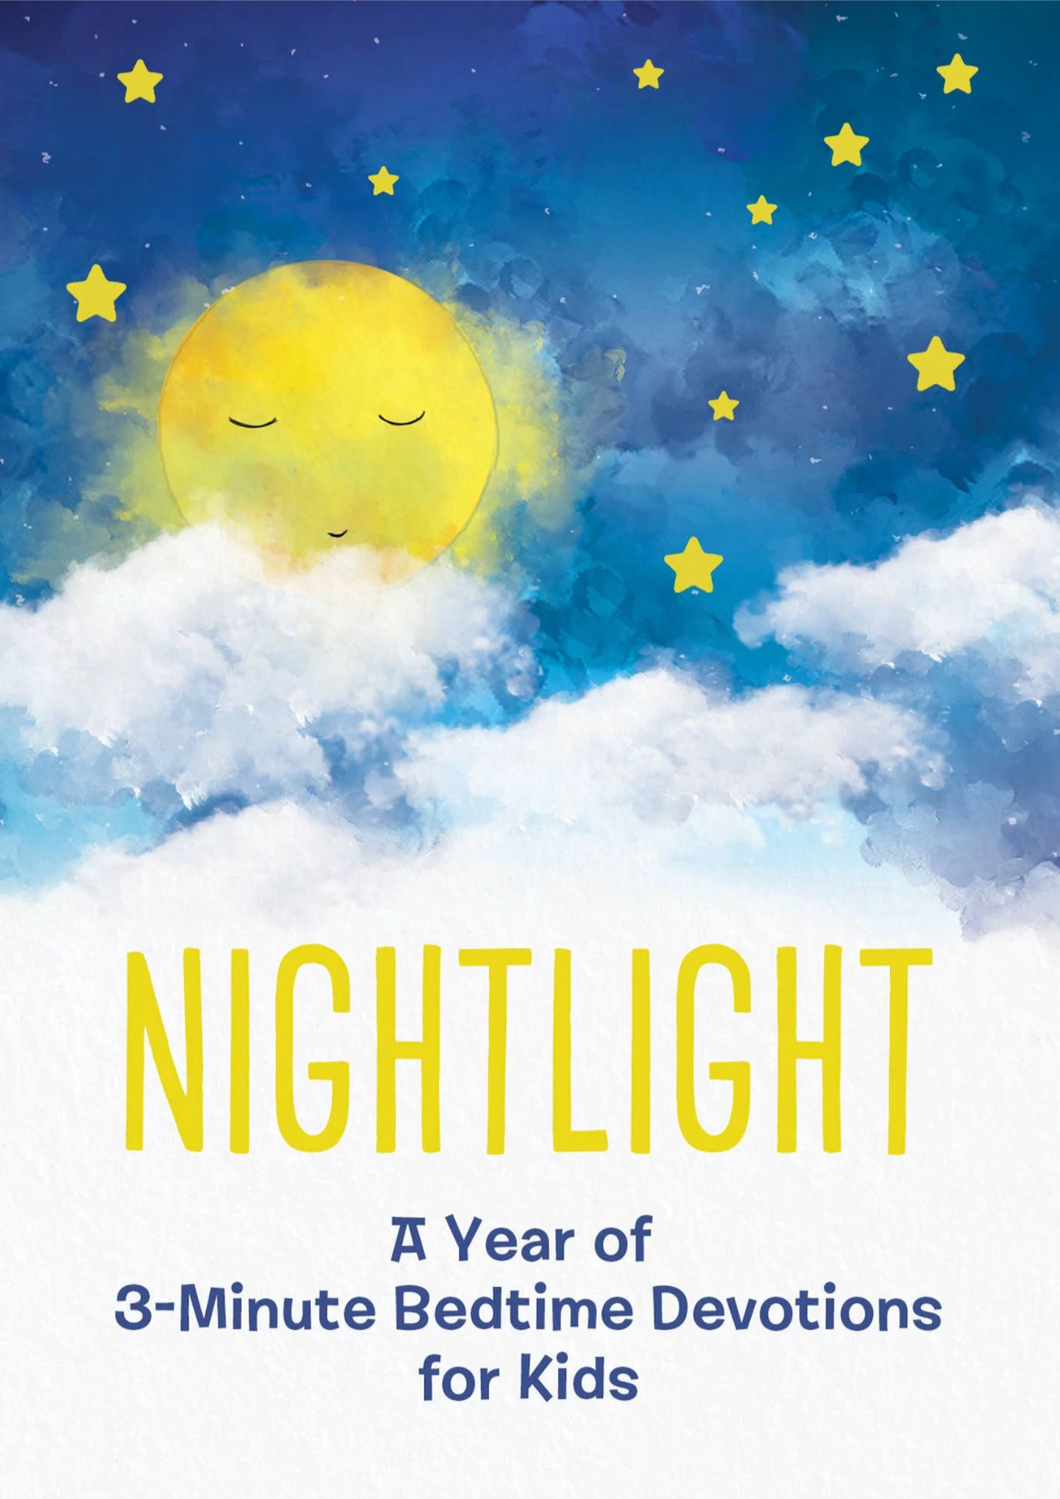 Nightlight, a Year of 3-Minute Bedtime Devotions for Kids